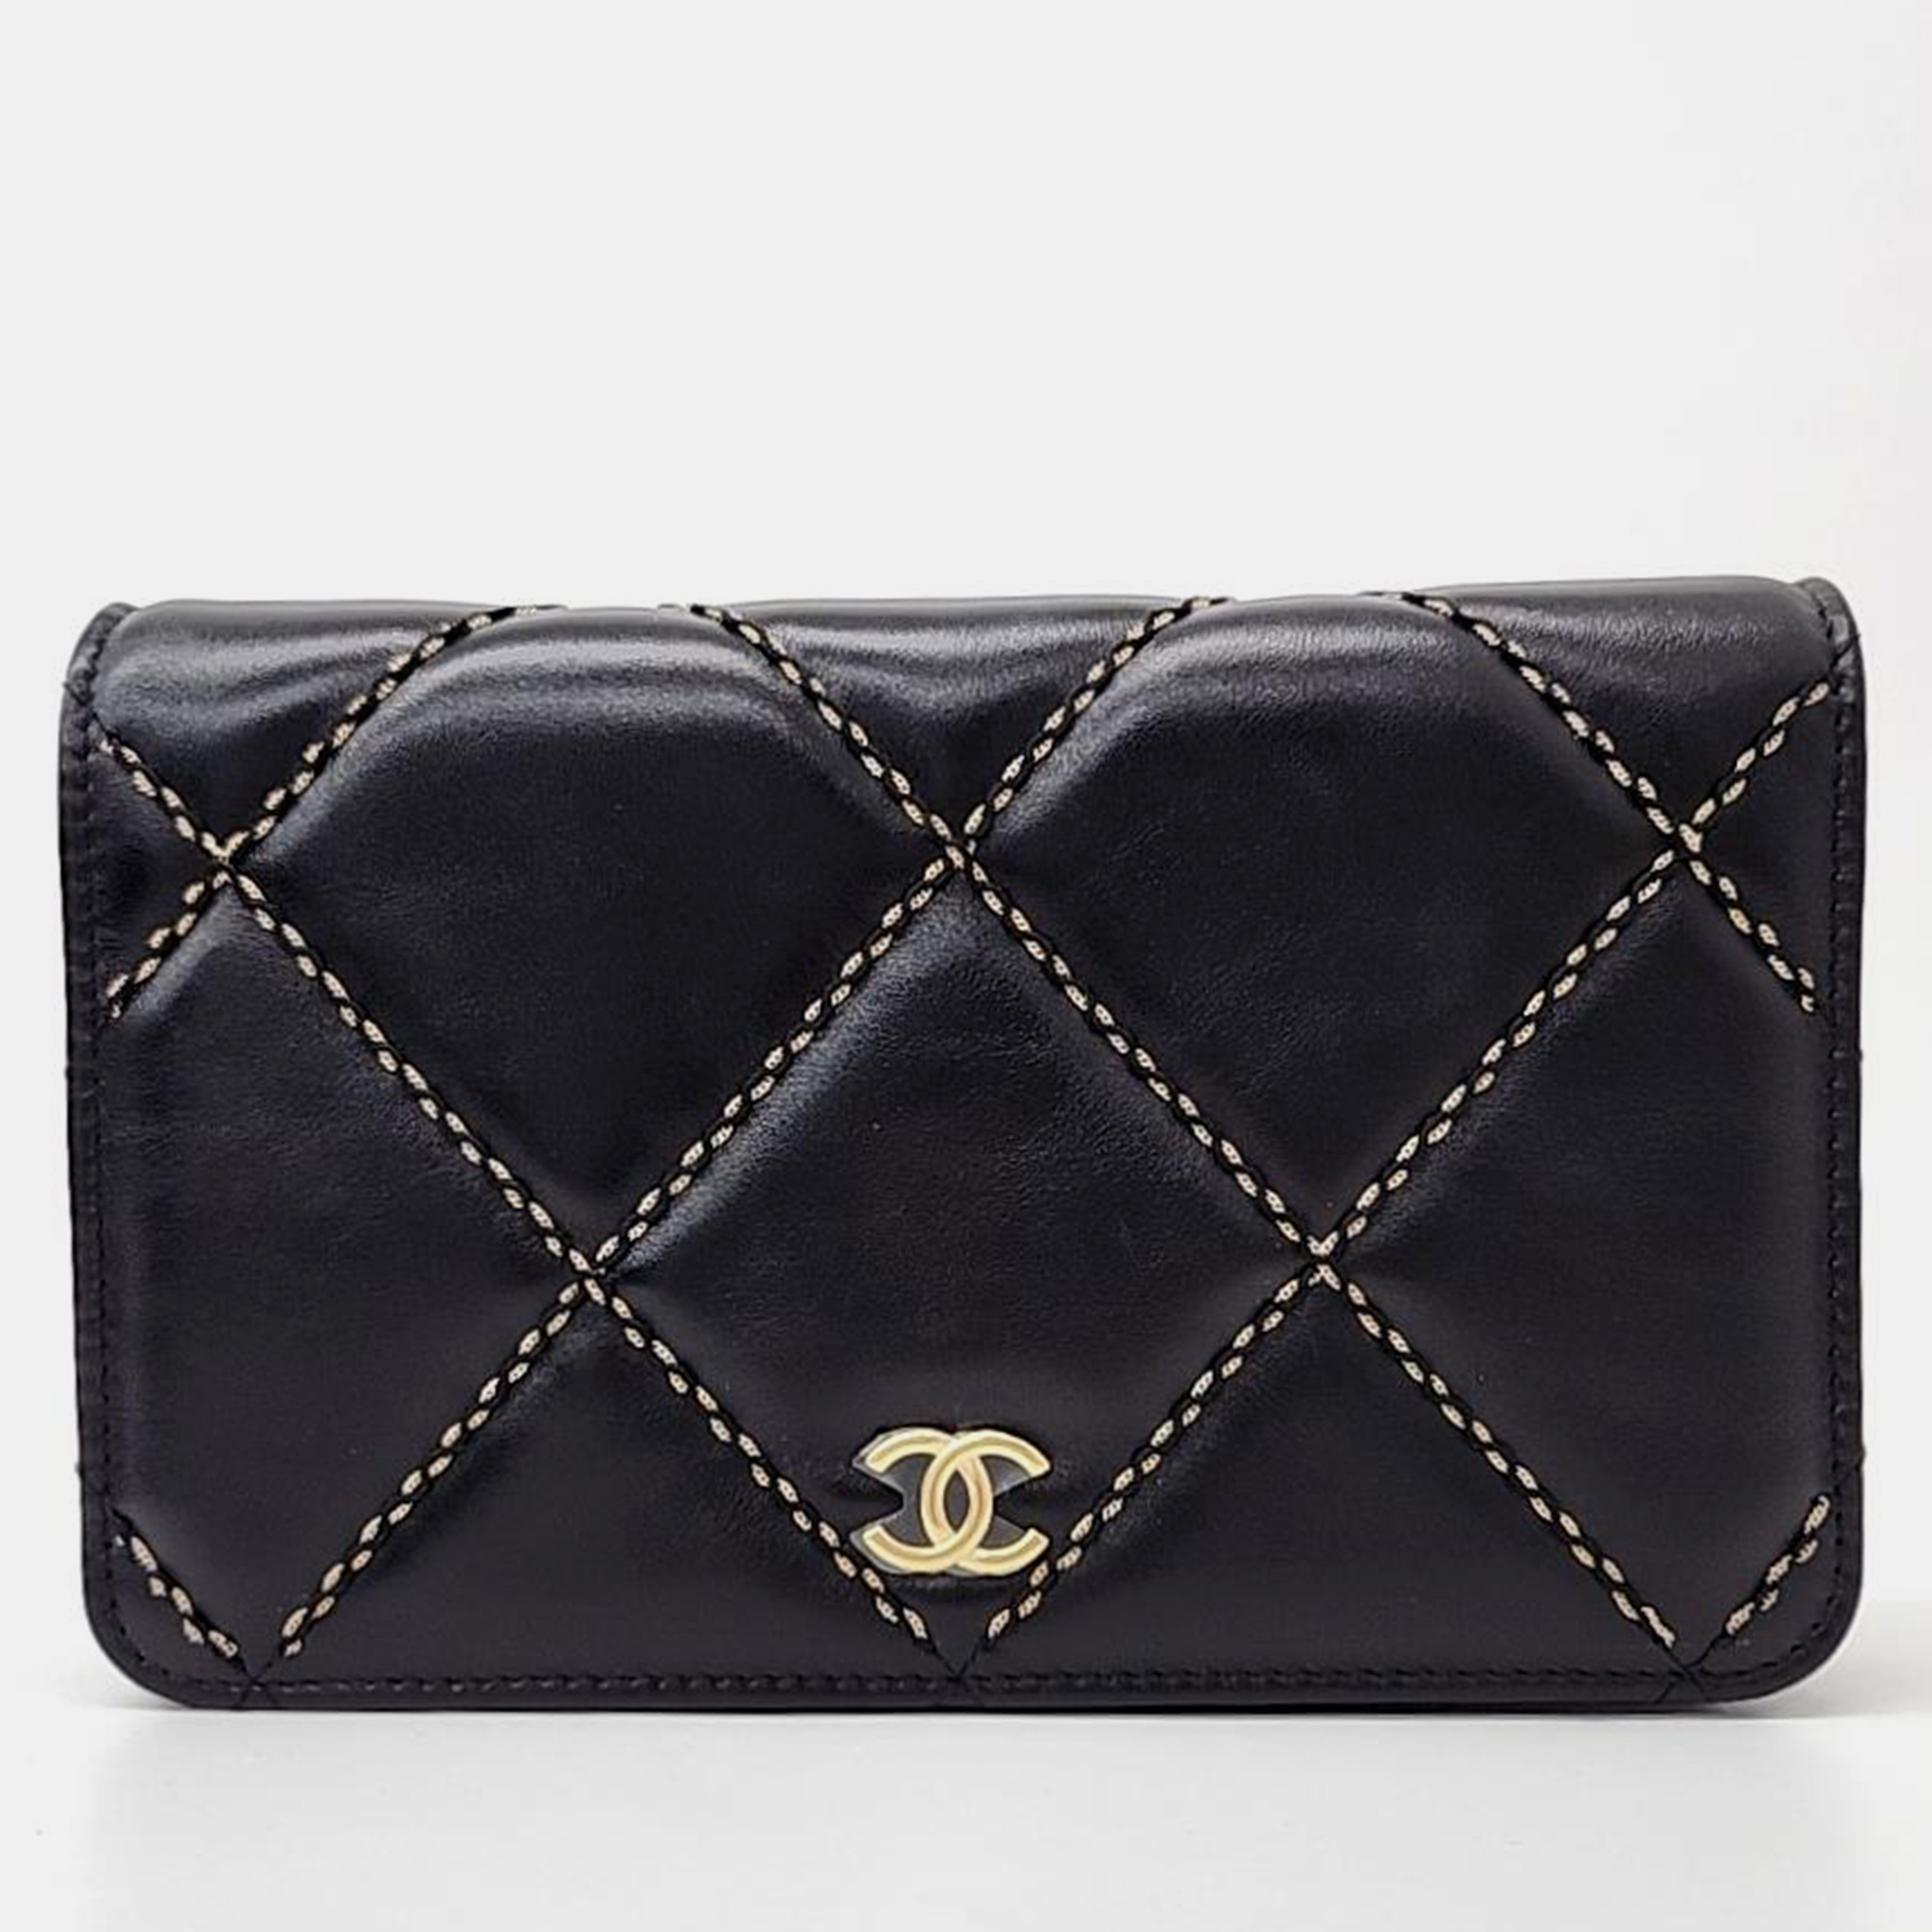 Chanel woc mini crossbody bag